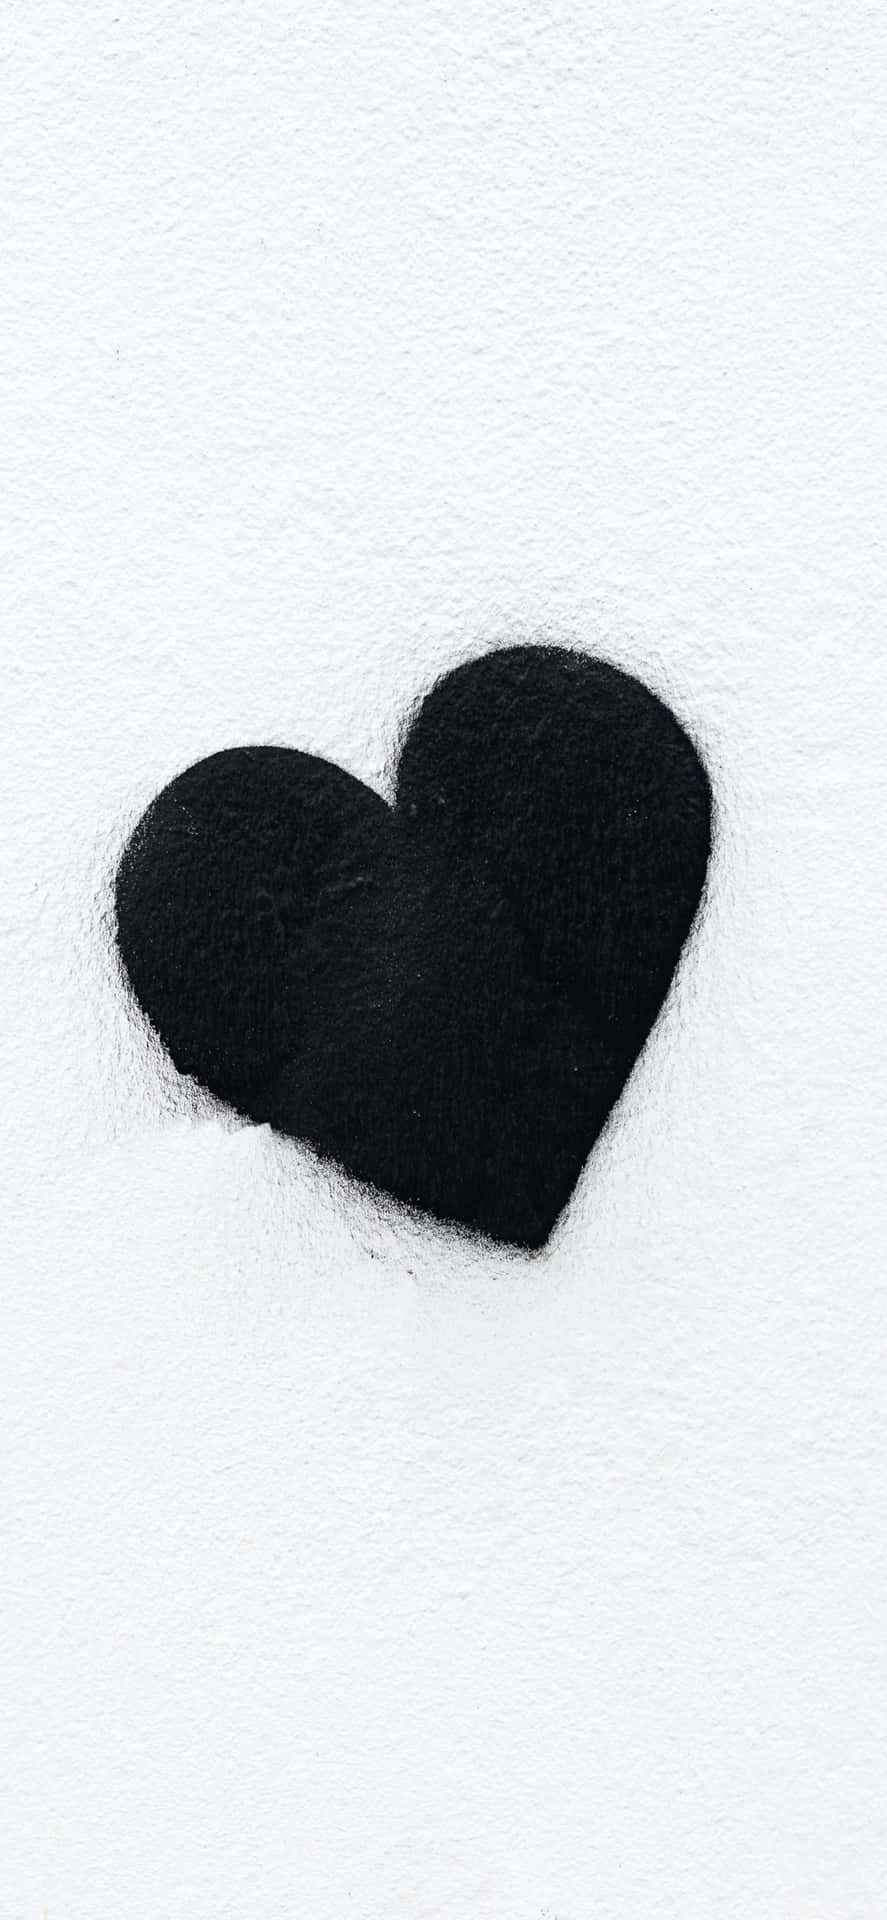 Minimalistic Black Heart iPhone Wallpaper